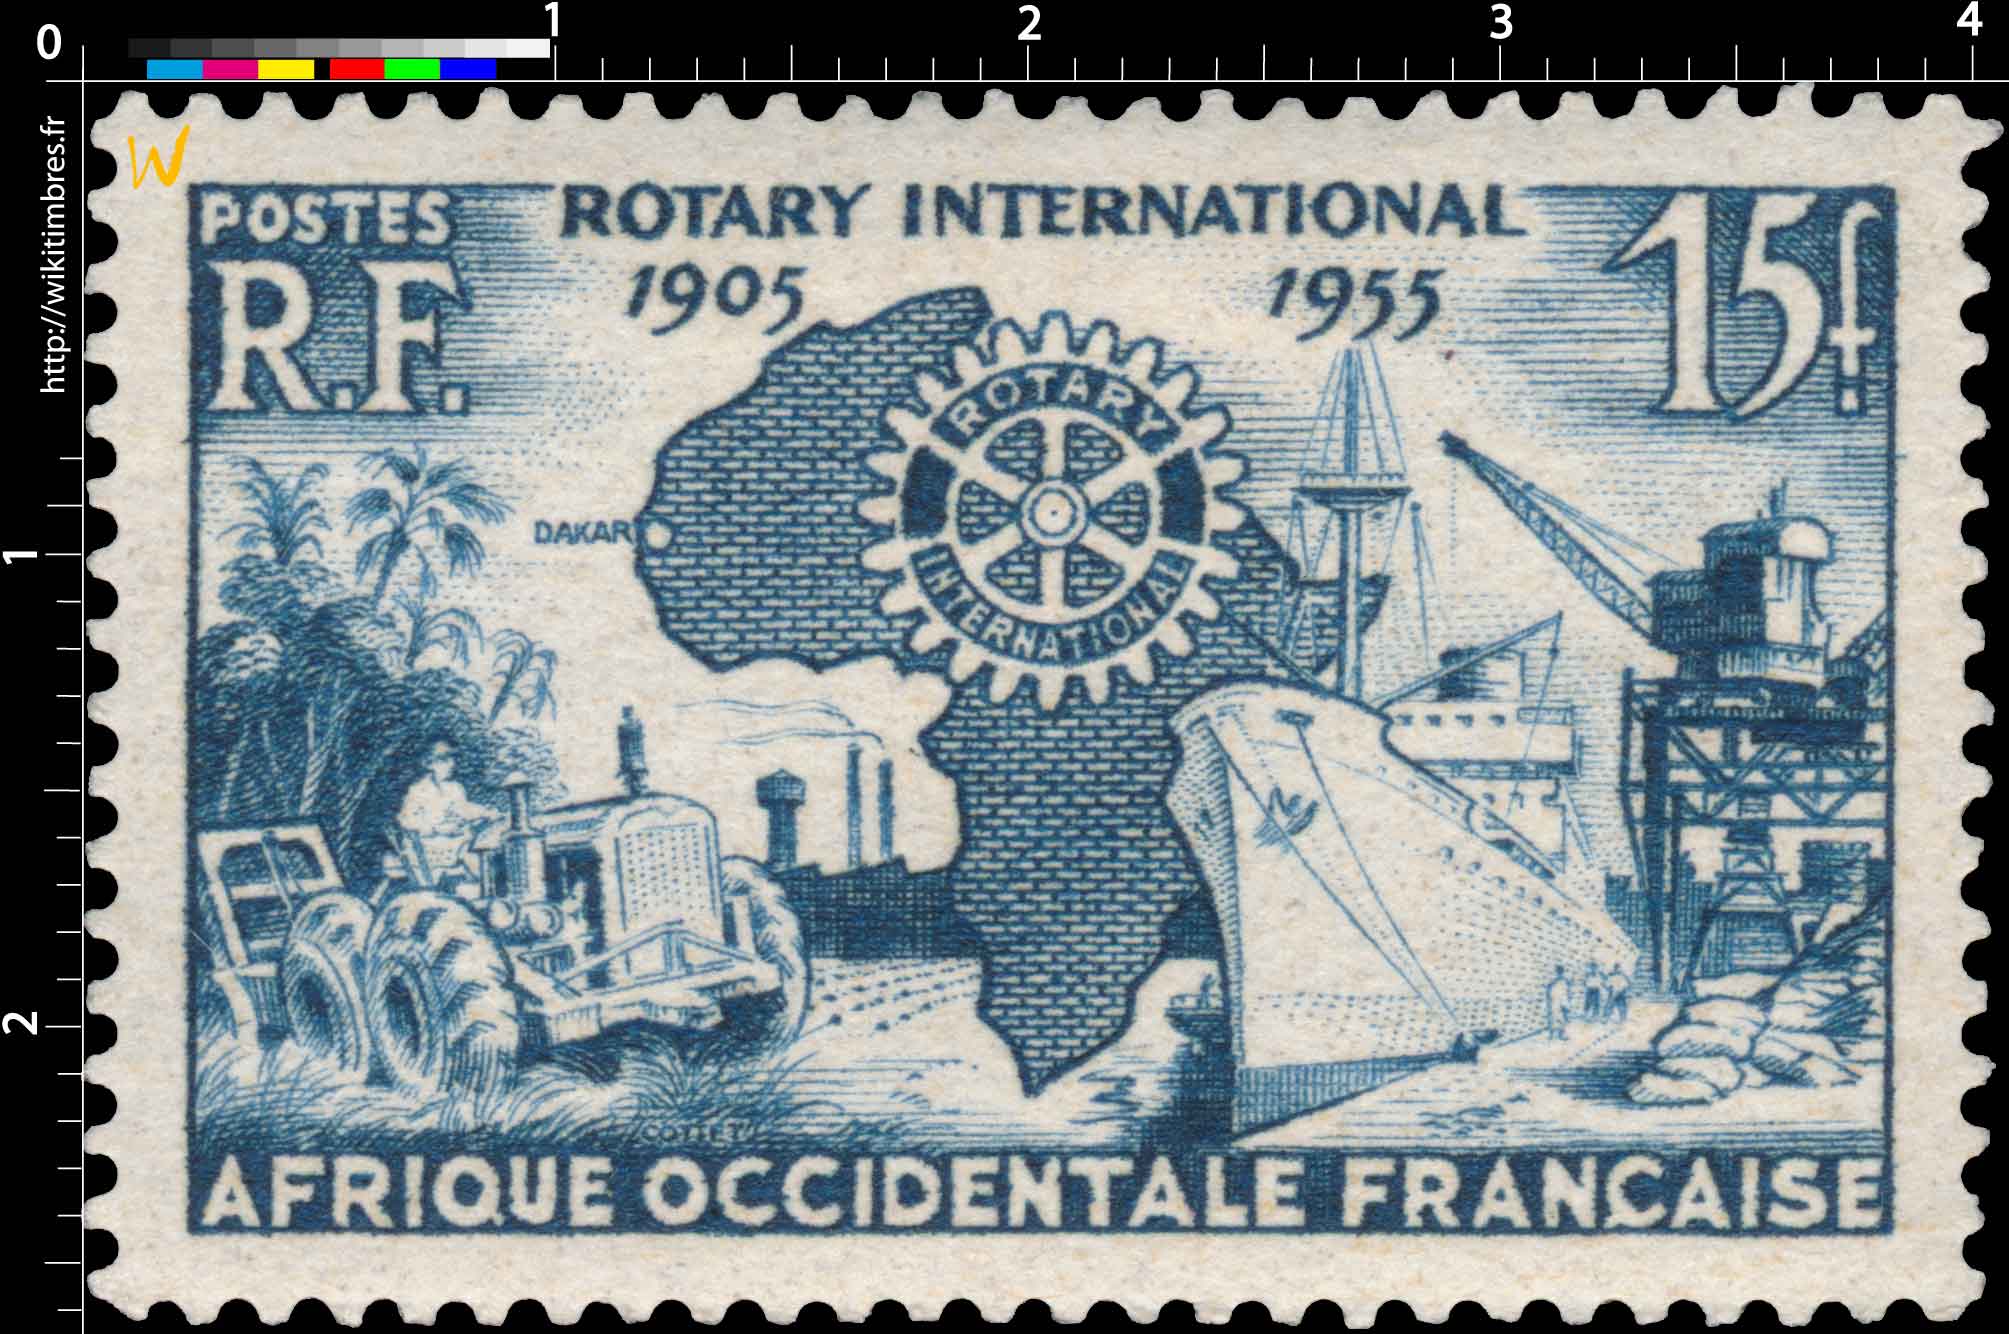 Afrique Occidentale Française - Rotary international 1905 1955